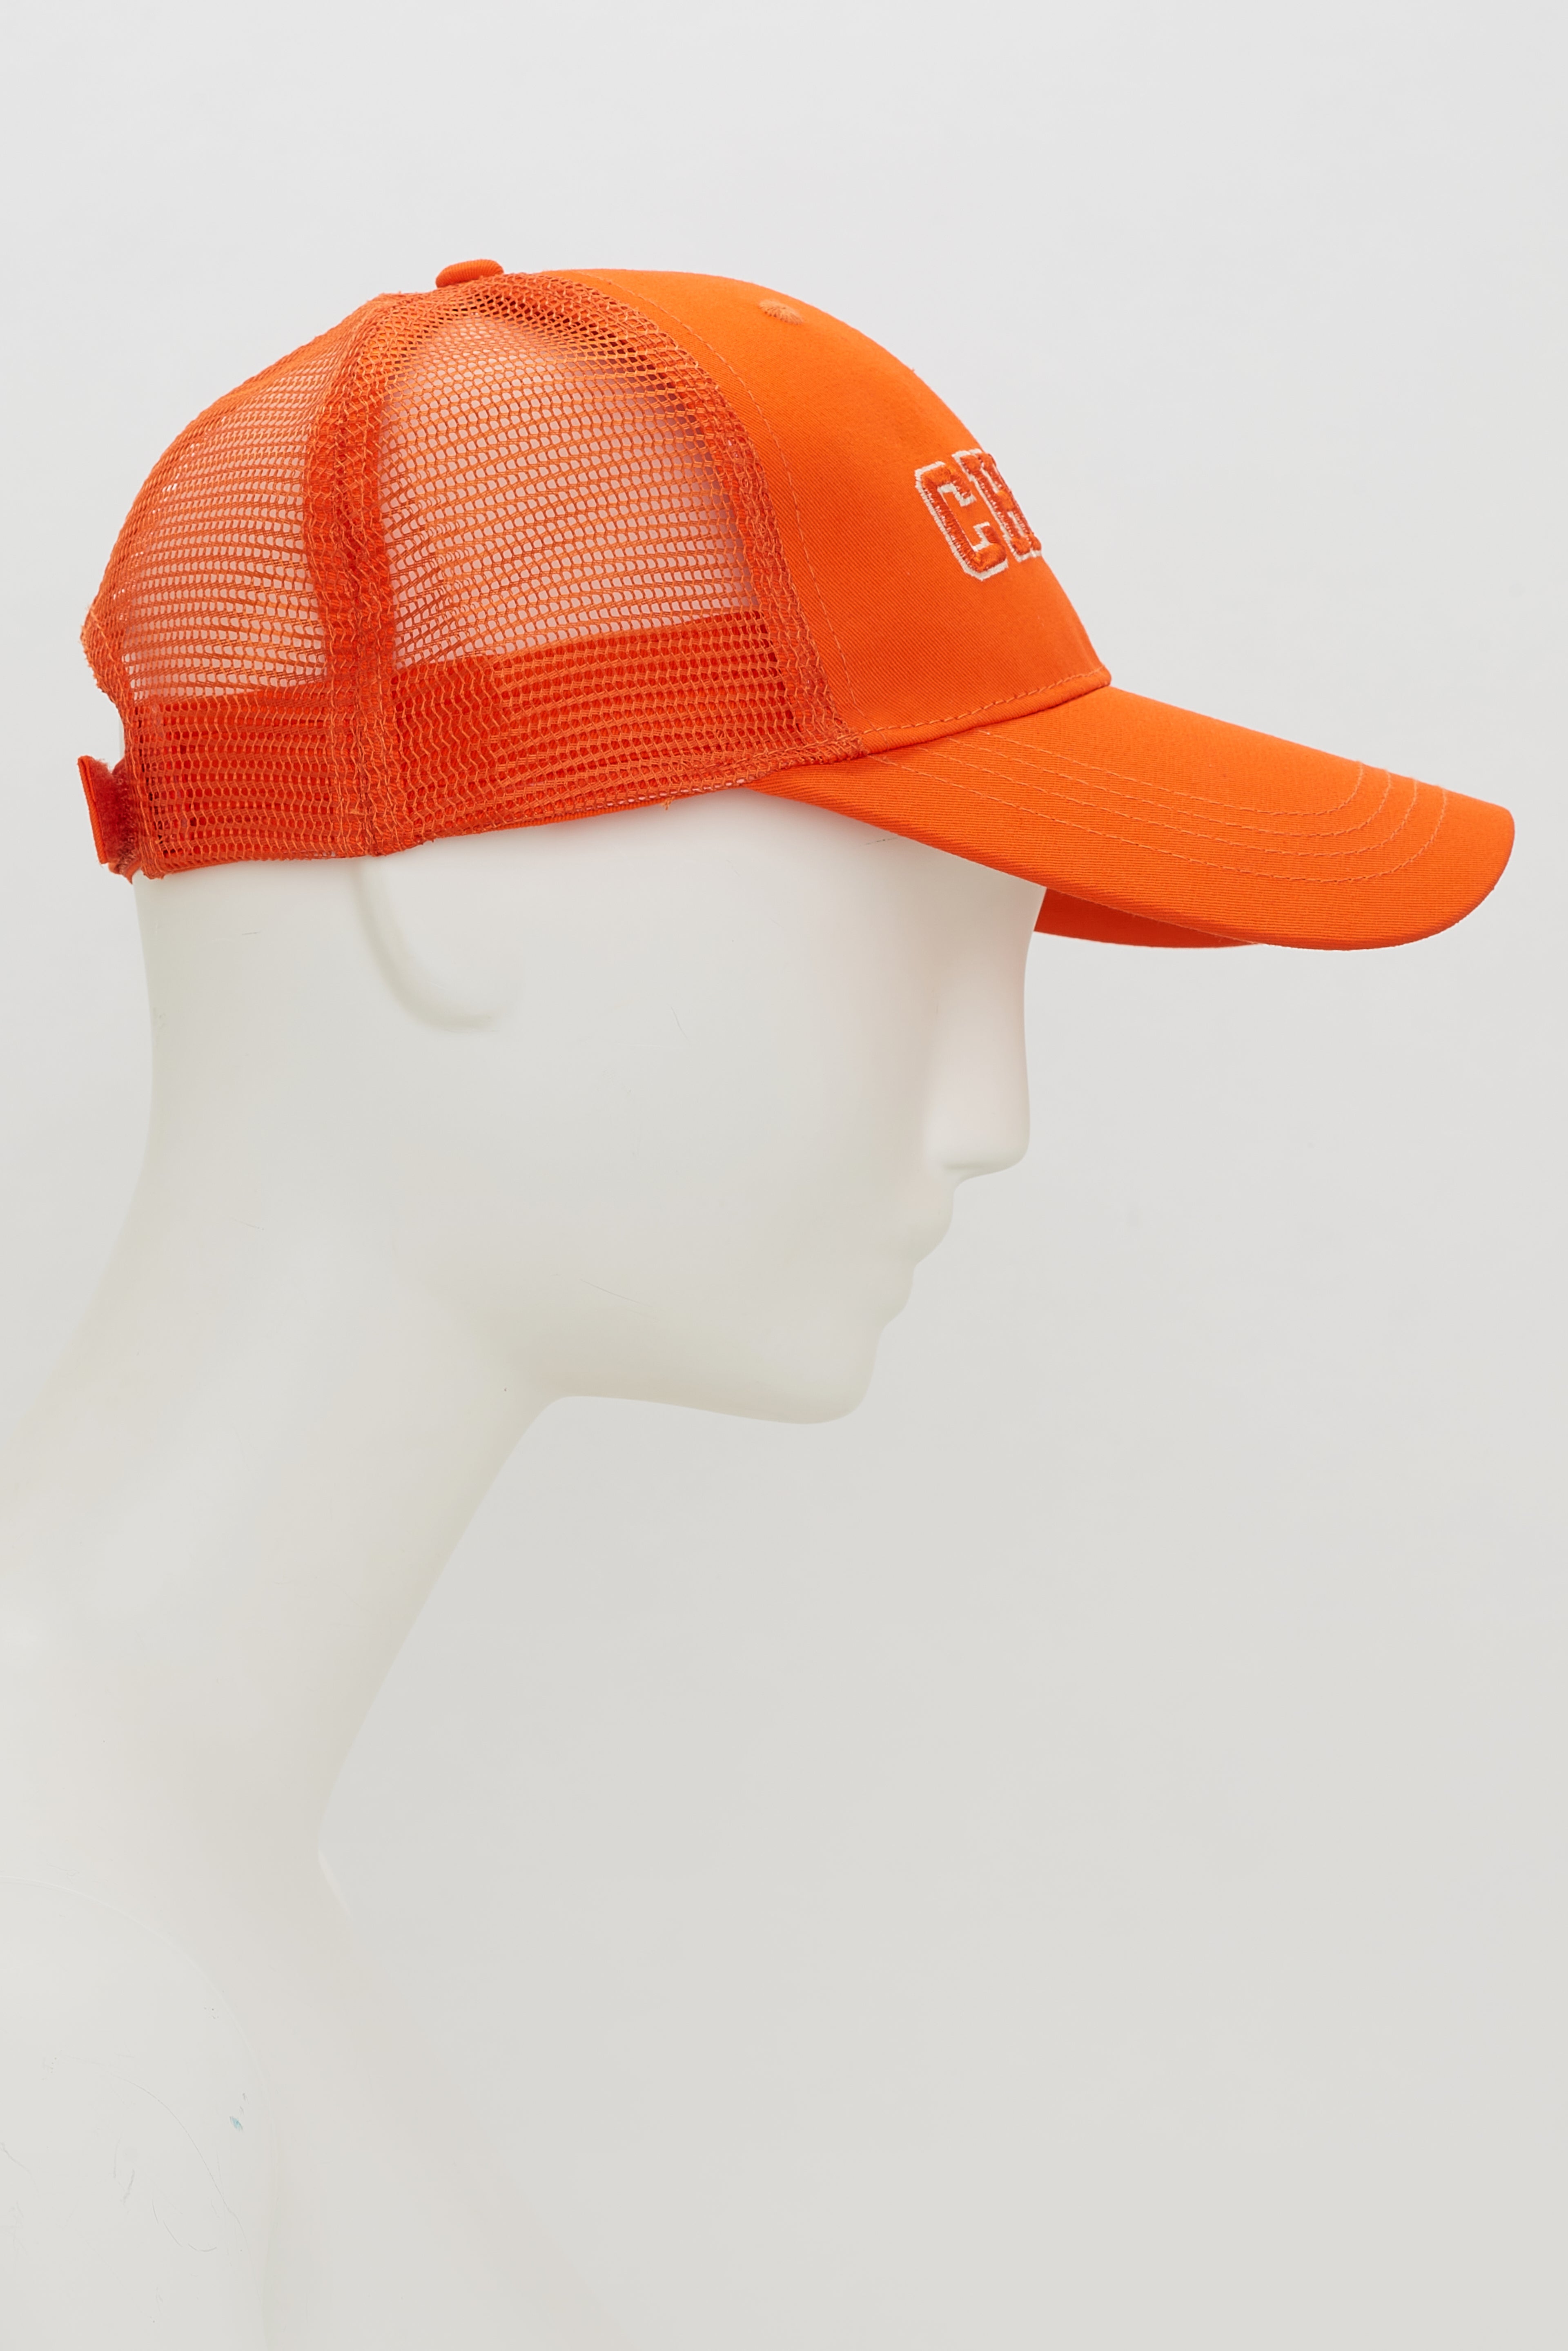 Dorothee-Schumacher-OUTLET-SALE-CHIYC-baseball-cap-Accessoires-OS-spiced-orange-3.jpg